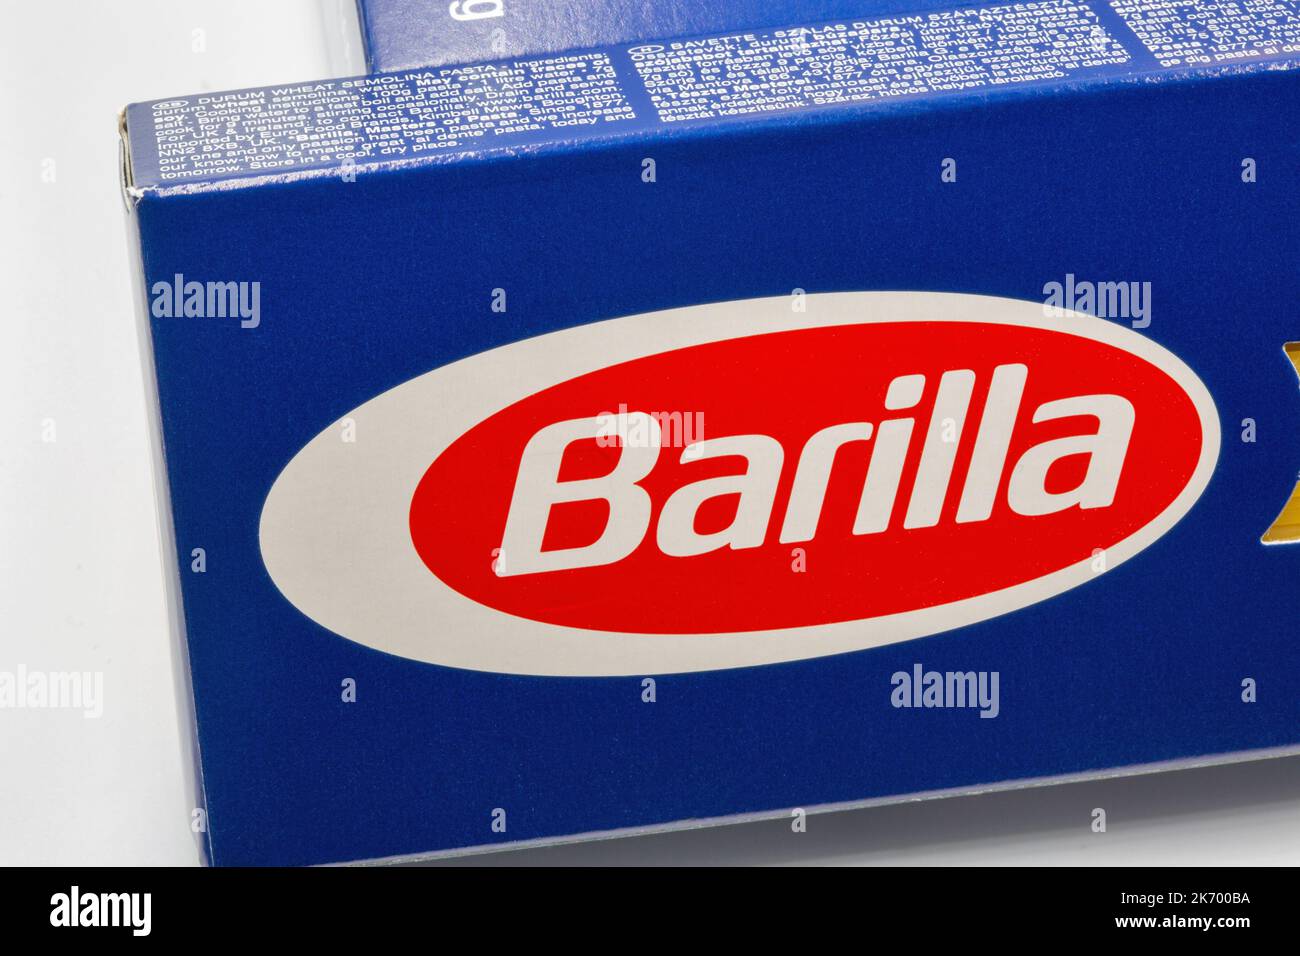 BARILLA - Pâtes Macaroni 1Kg - Lot De 4 - Offre Special